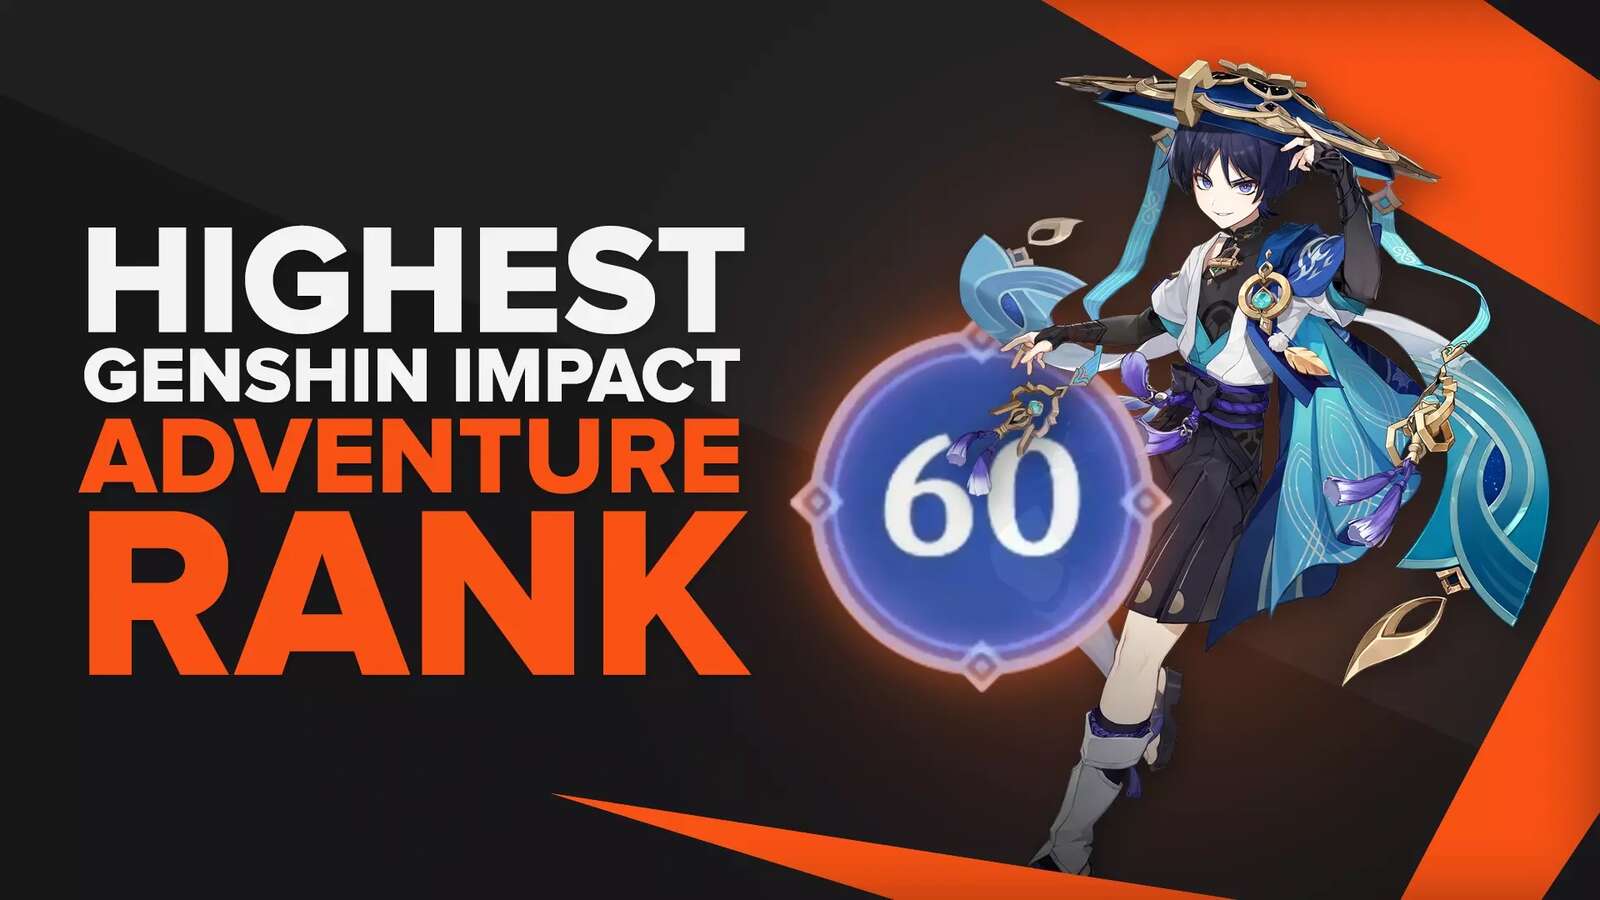 What's the Highest Adventure Rank (AR) Genshin Impact?